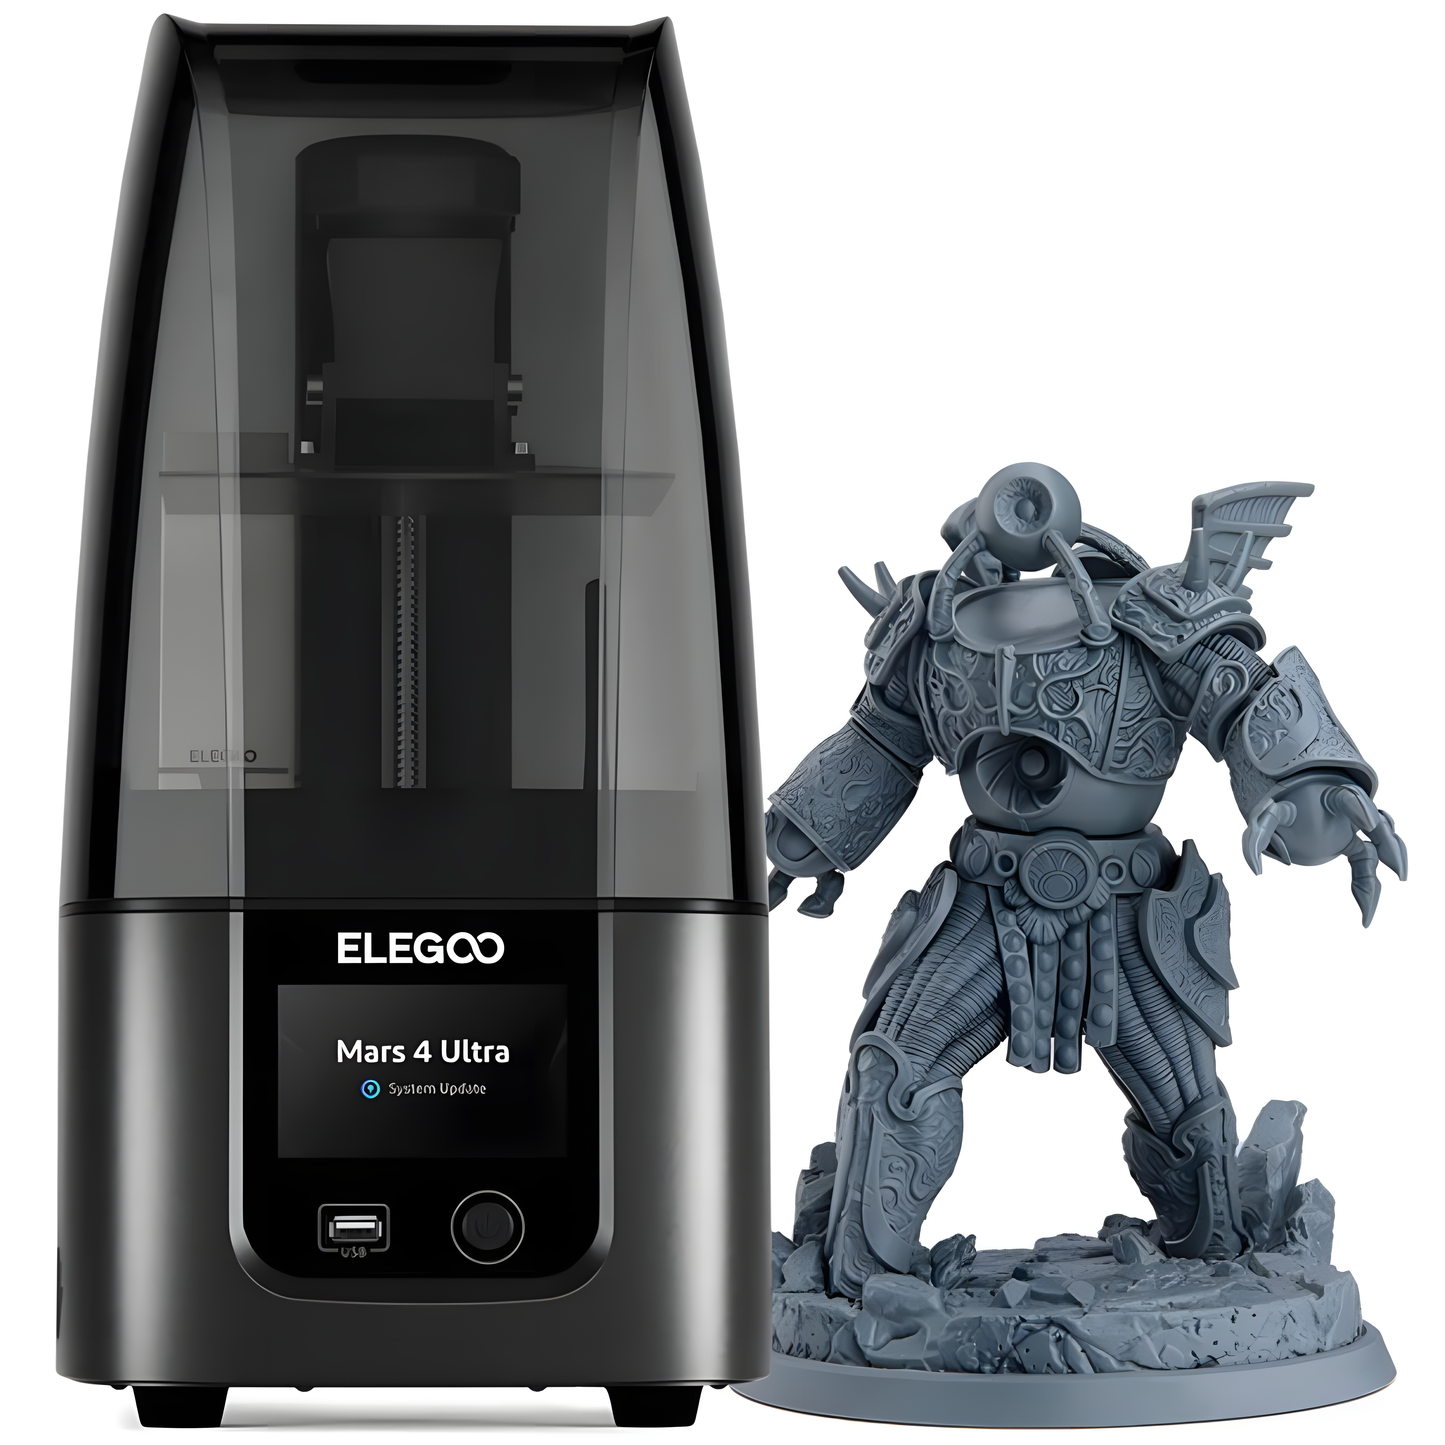 Elegoo Mars 4 Ultra 3D Printer